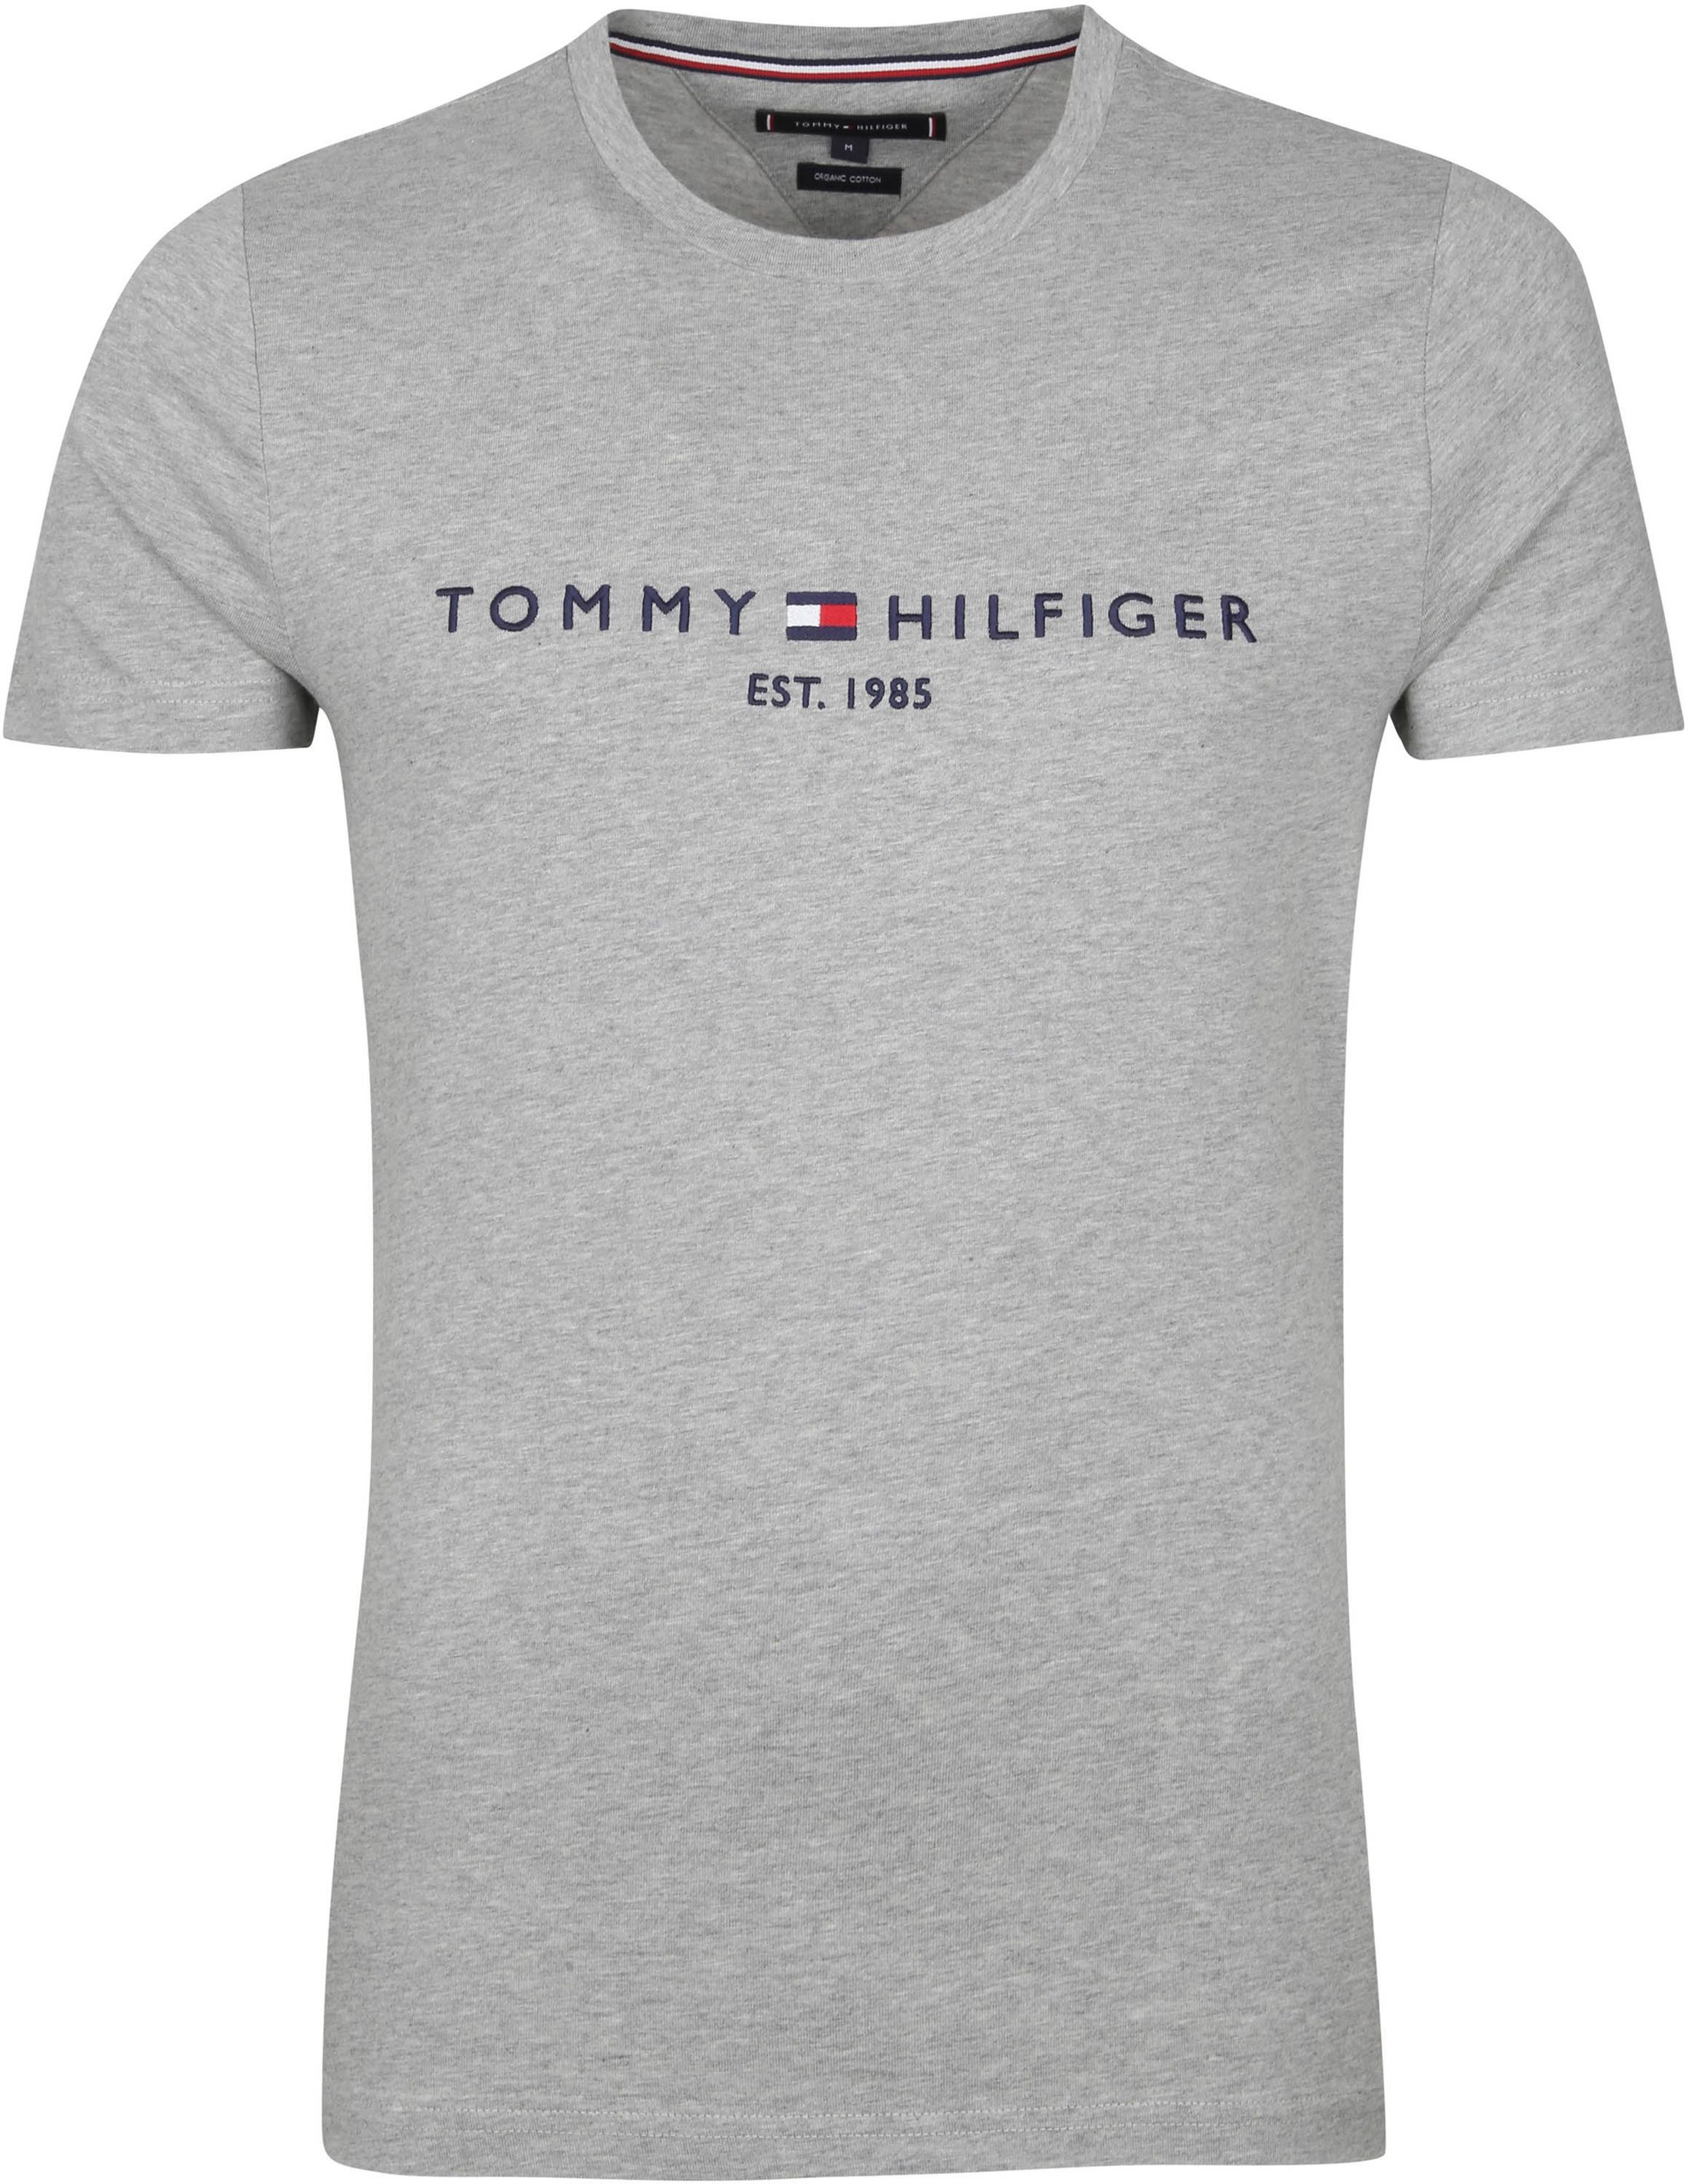 Tommy Hilfiger Logo T Shirt Grey size L